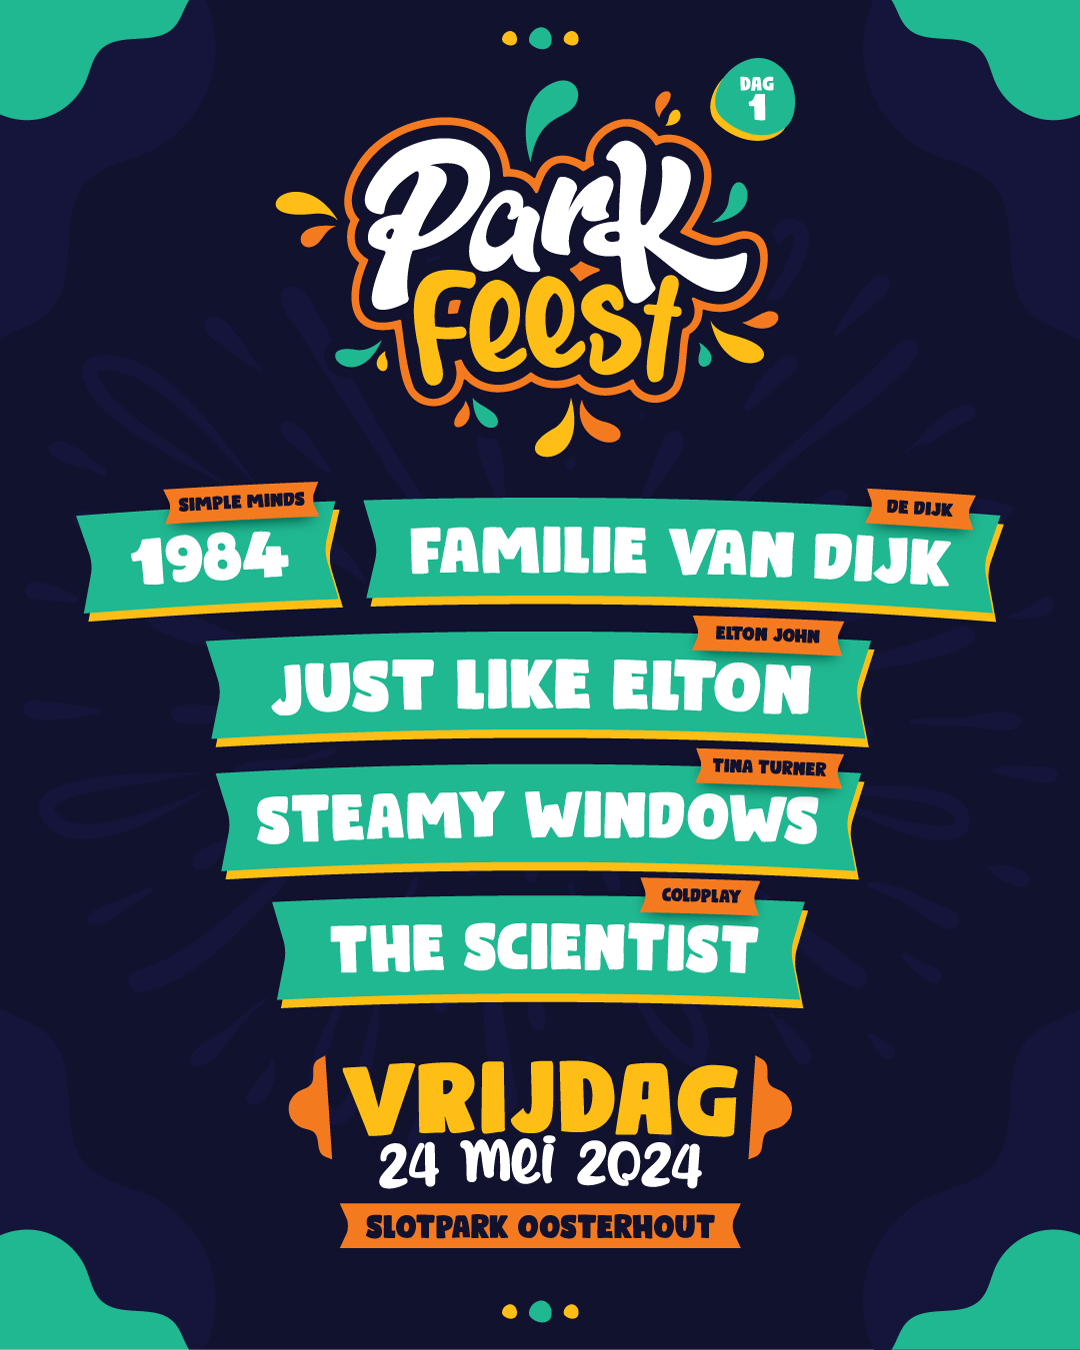 24-05-2024 -  @ Parkfeest, Oosterhout (NL)